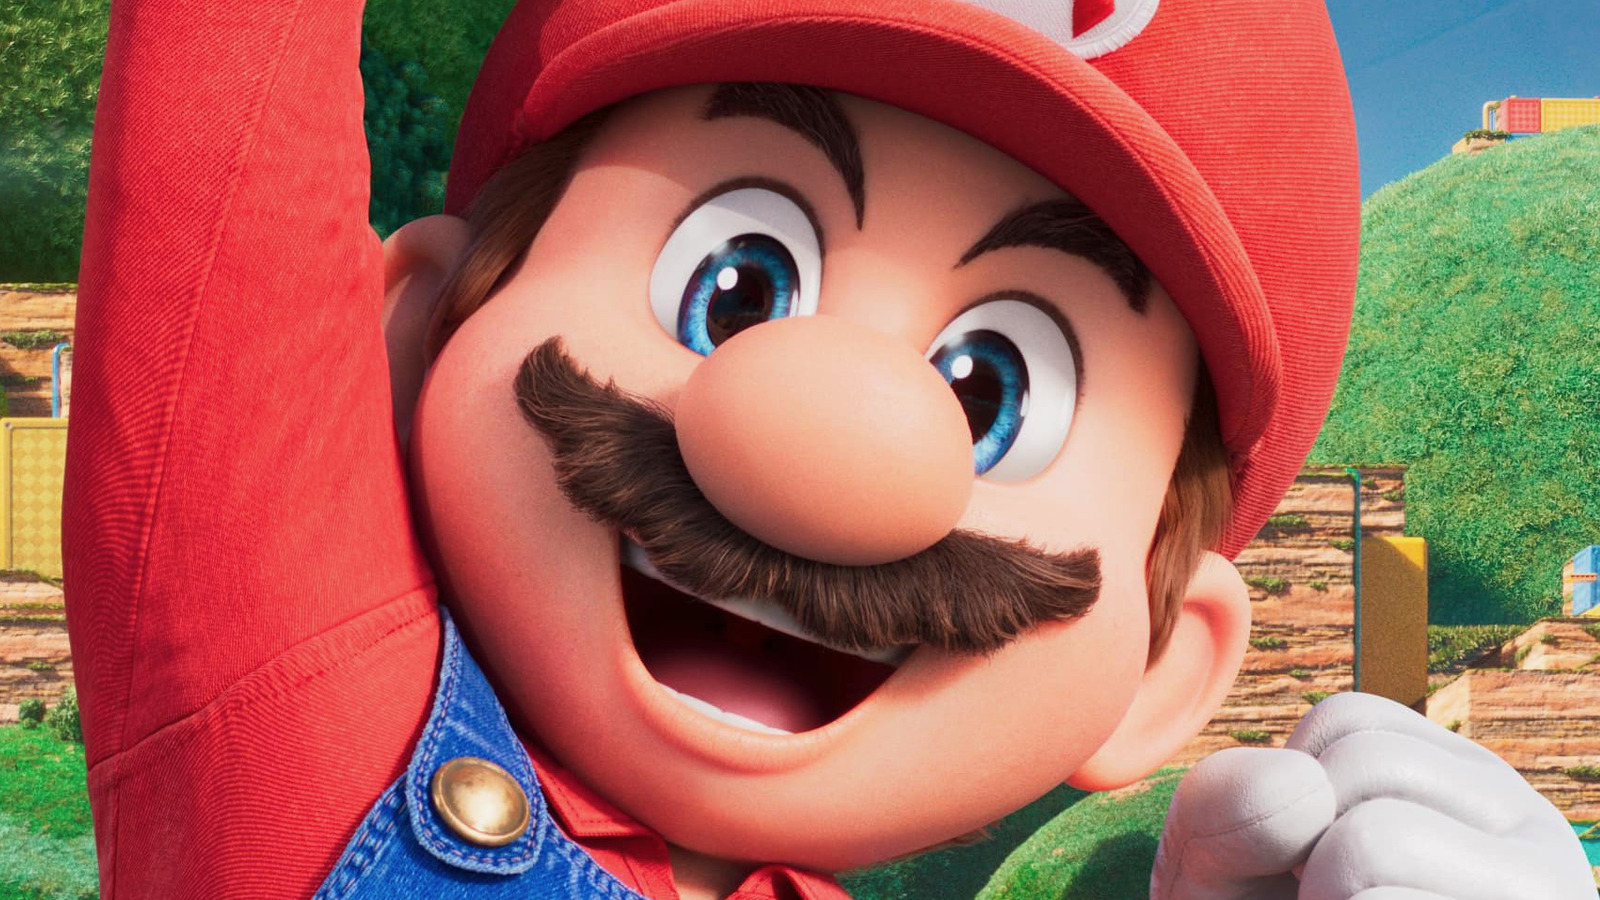 Nintendo's 'Year of Luigi' puts Mario's brother on center stage